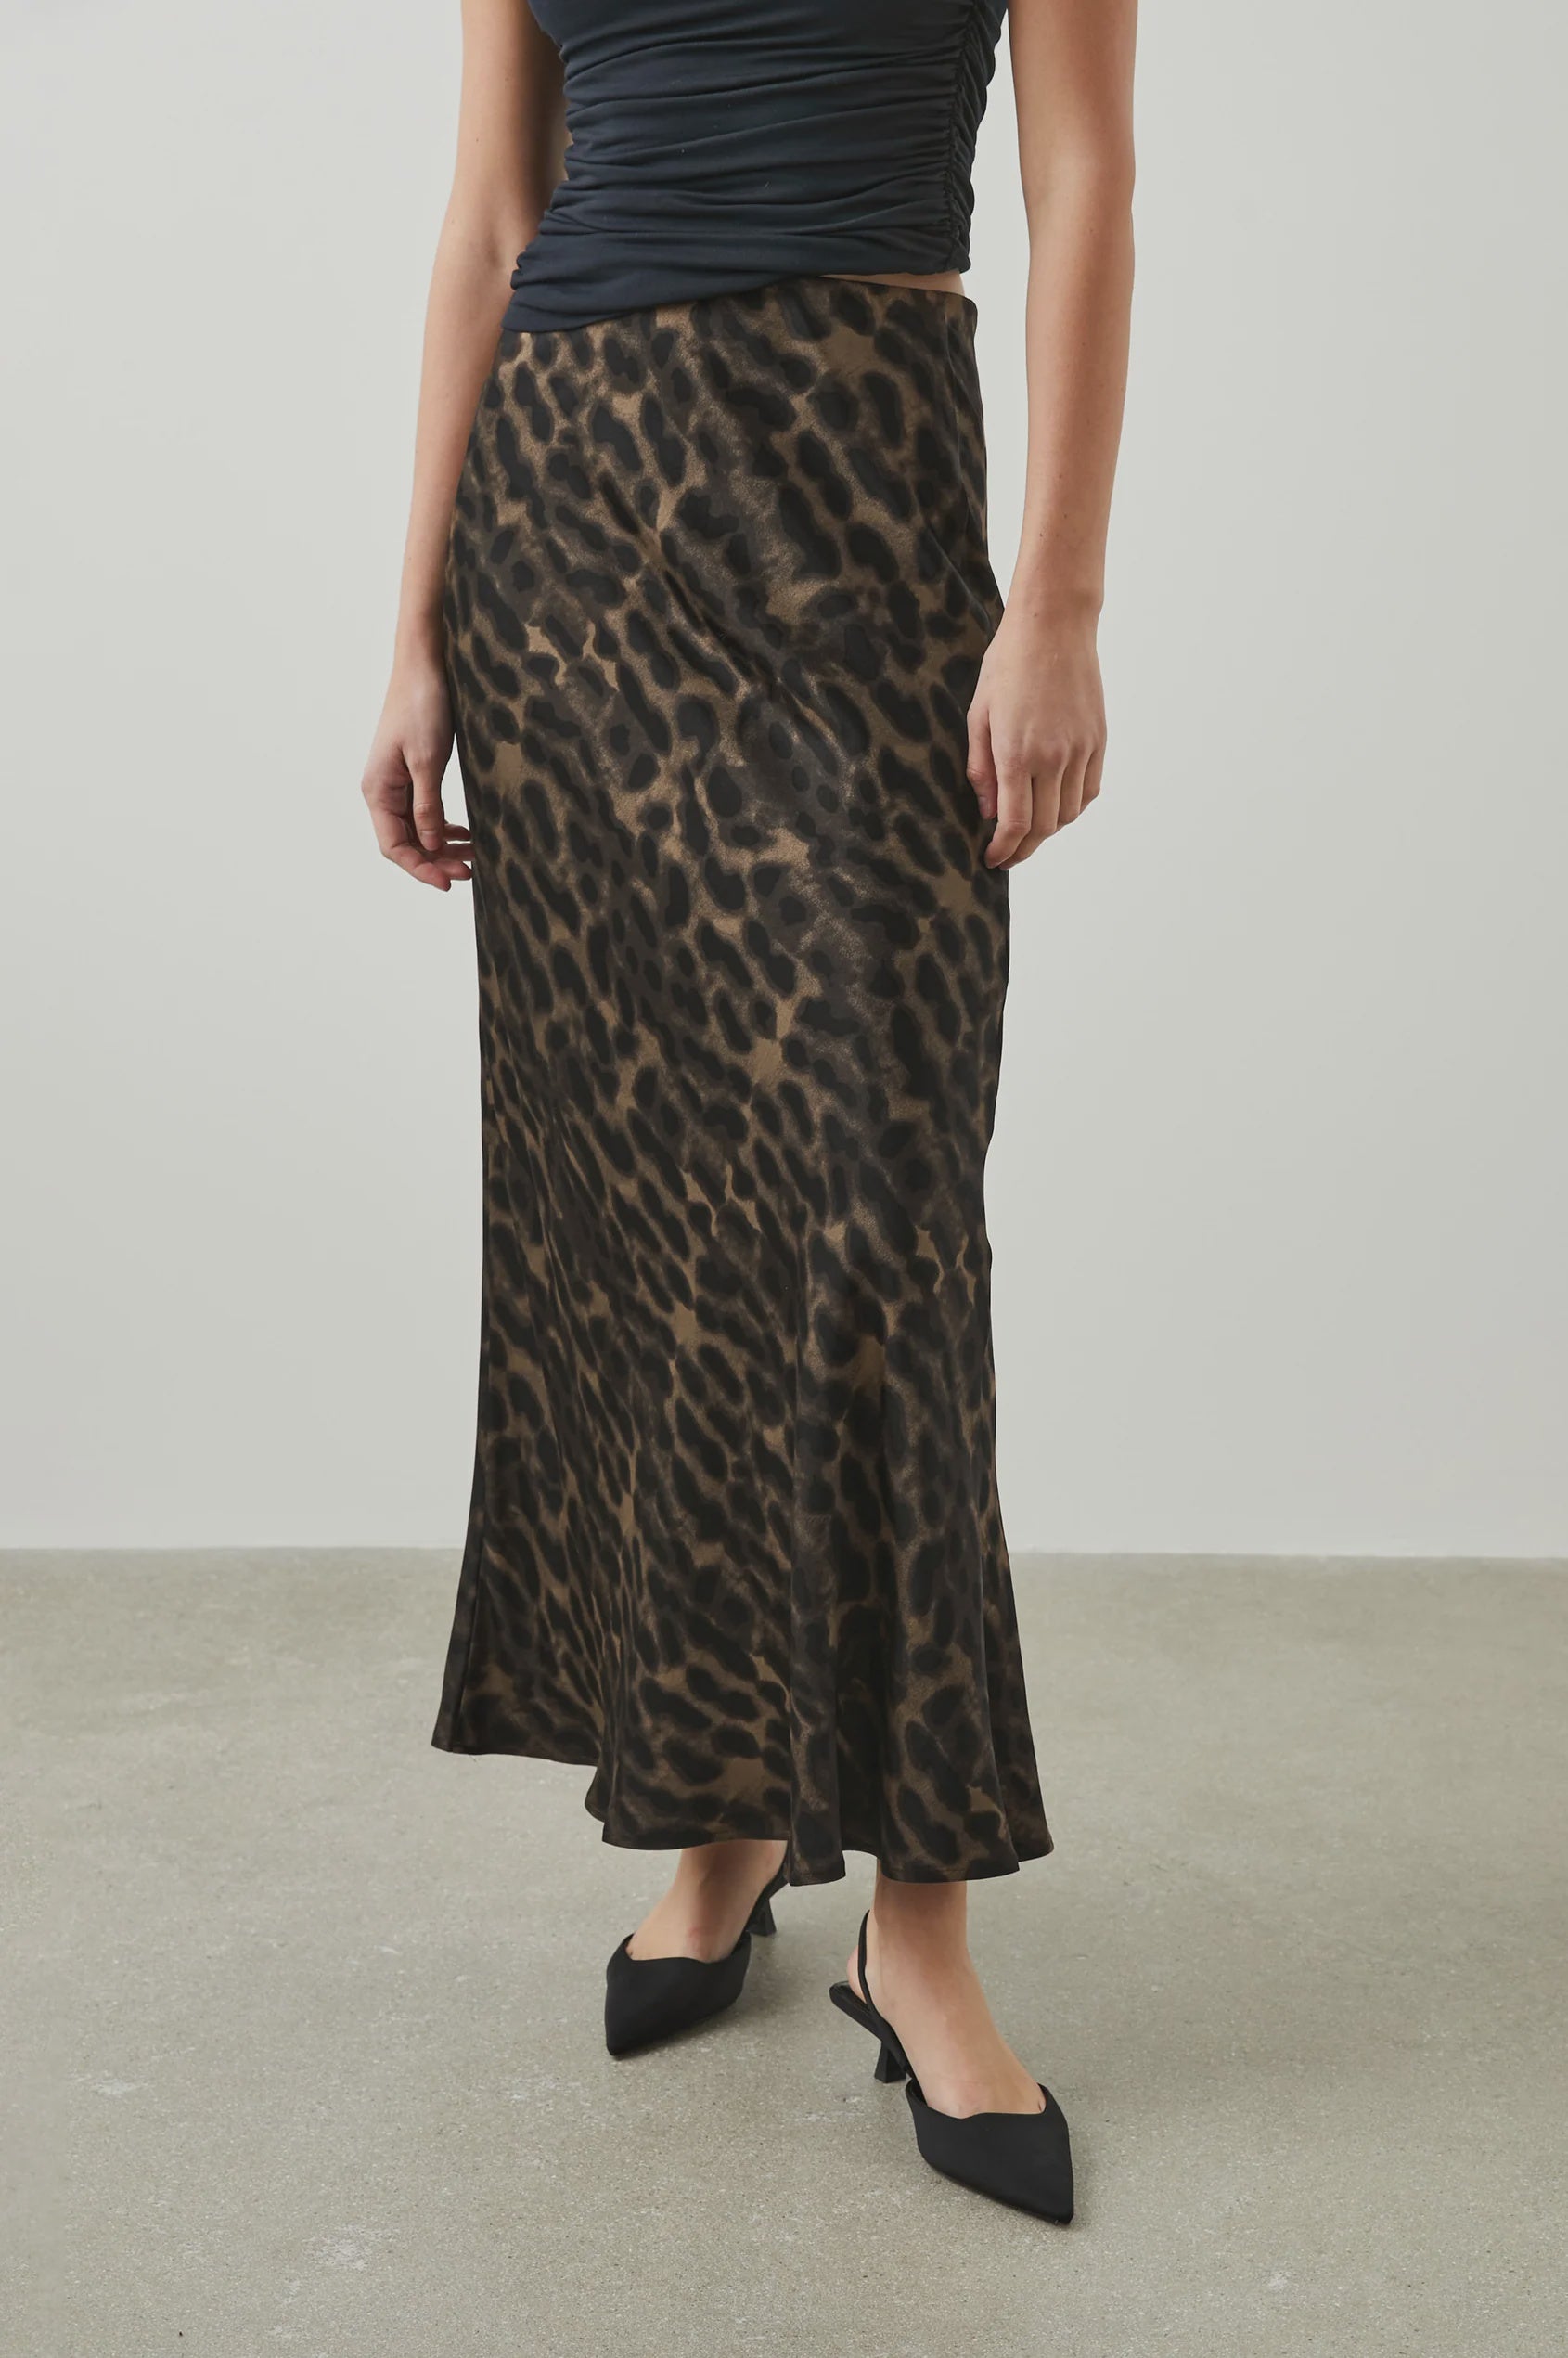 Leia Umber Leopard Skirt